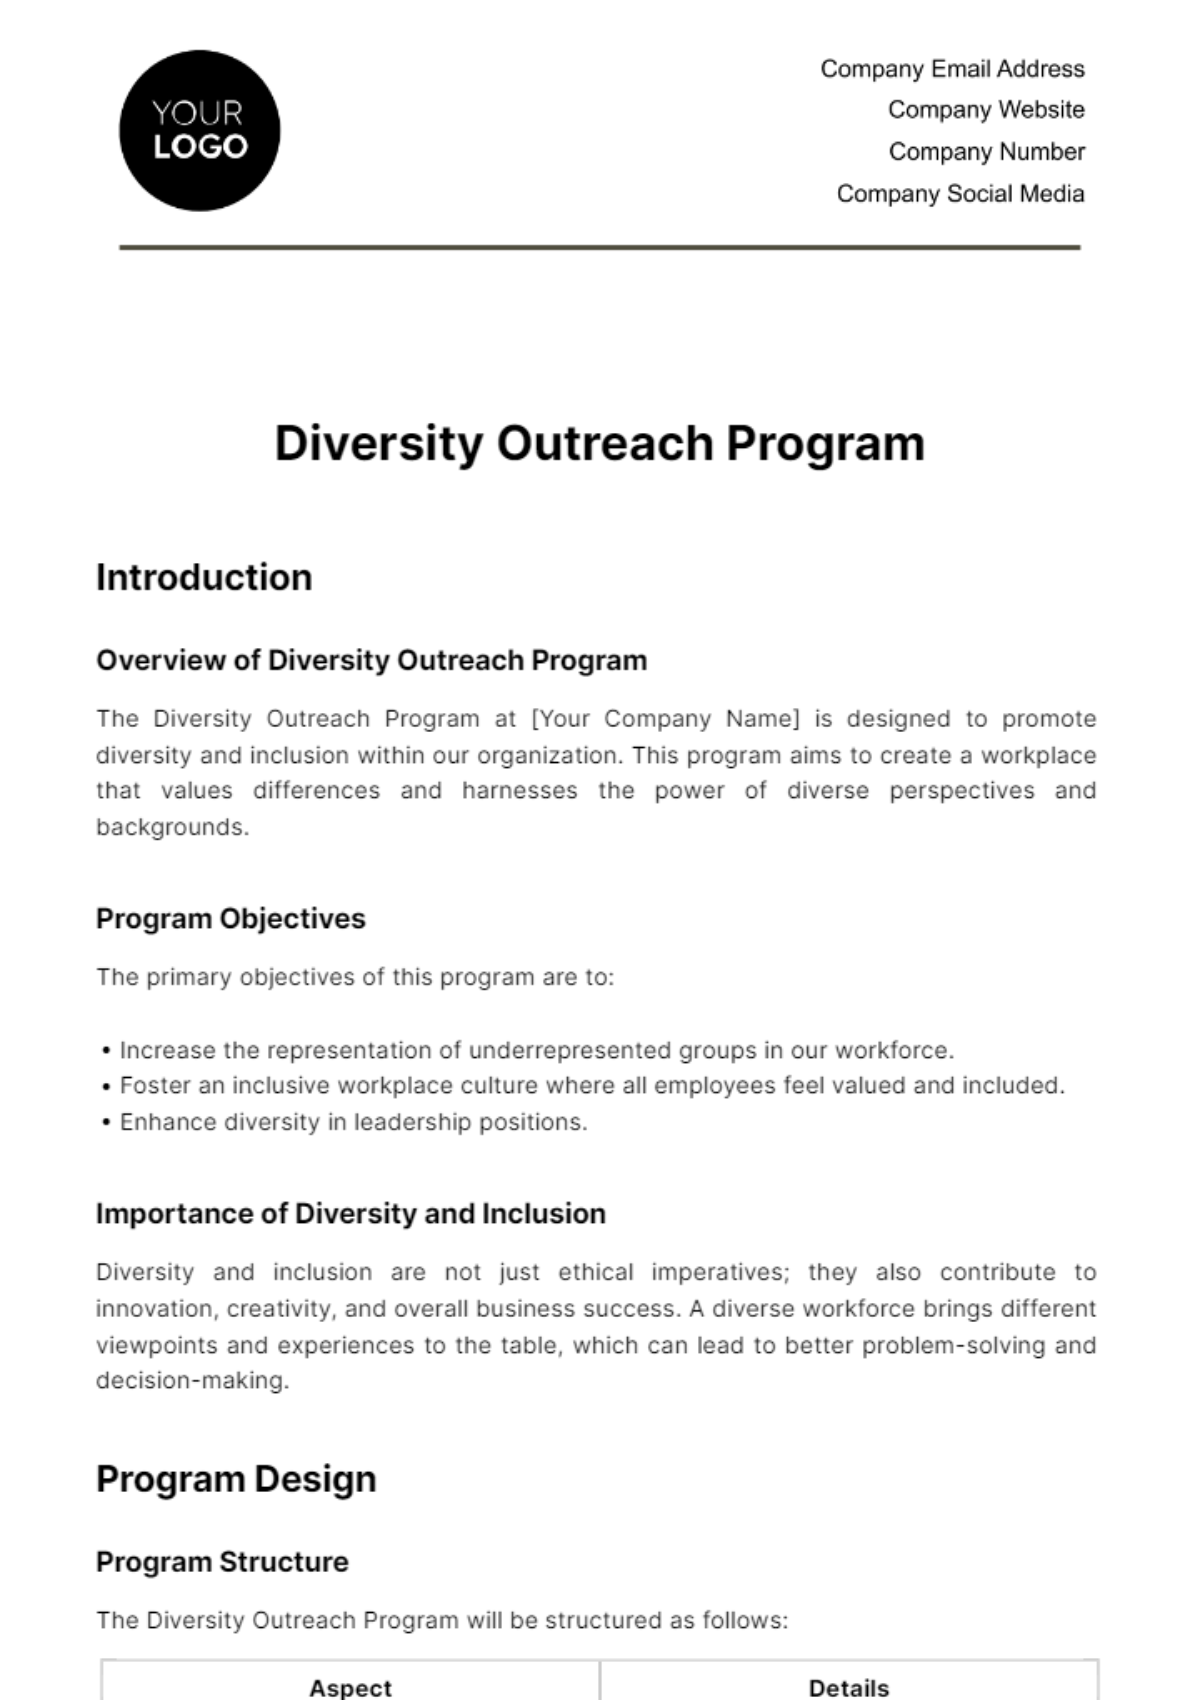 Free Diversity Outreach Program HR Template